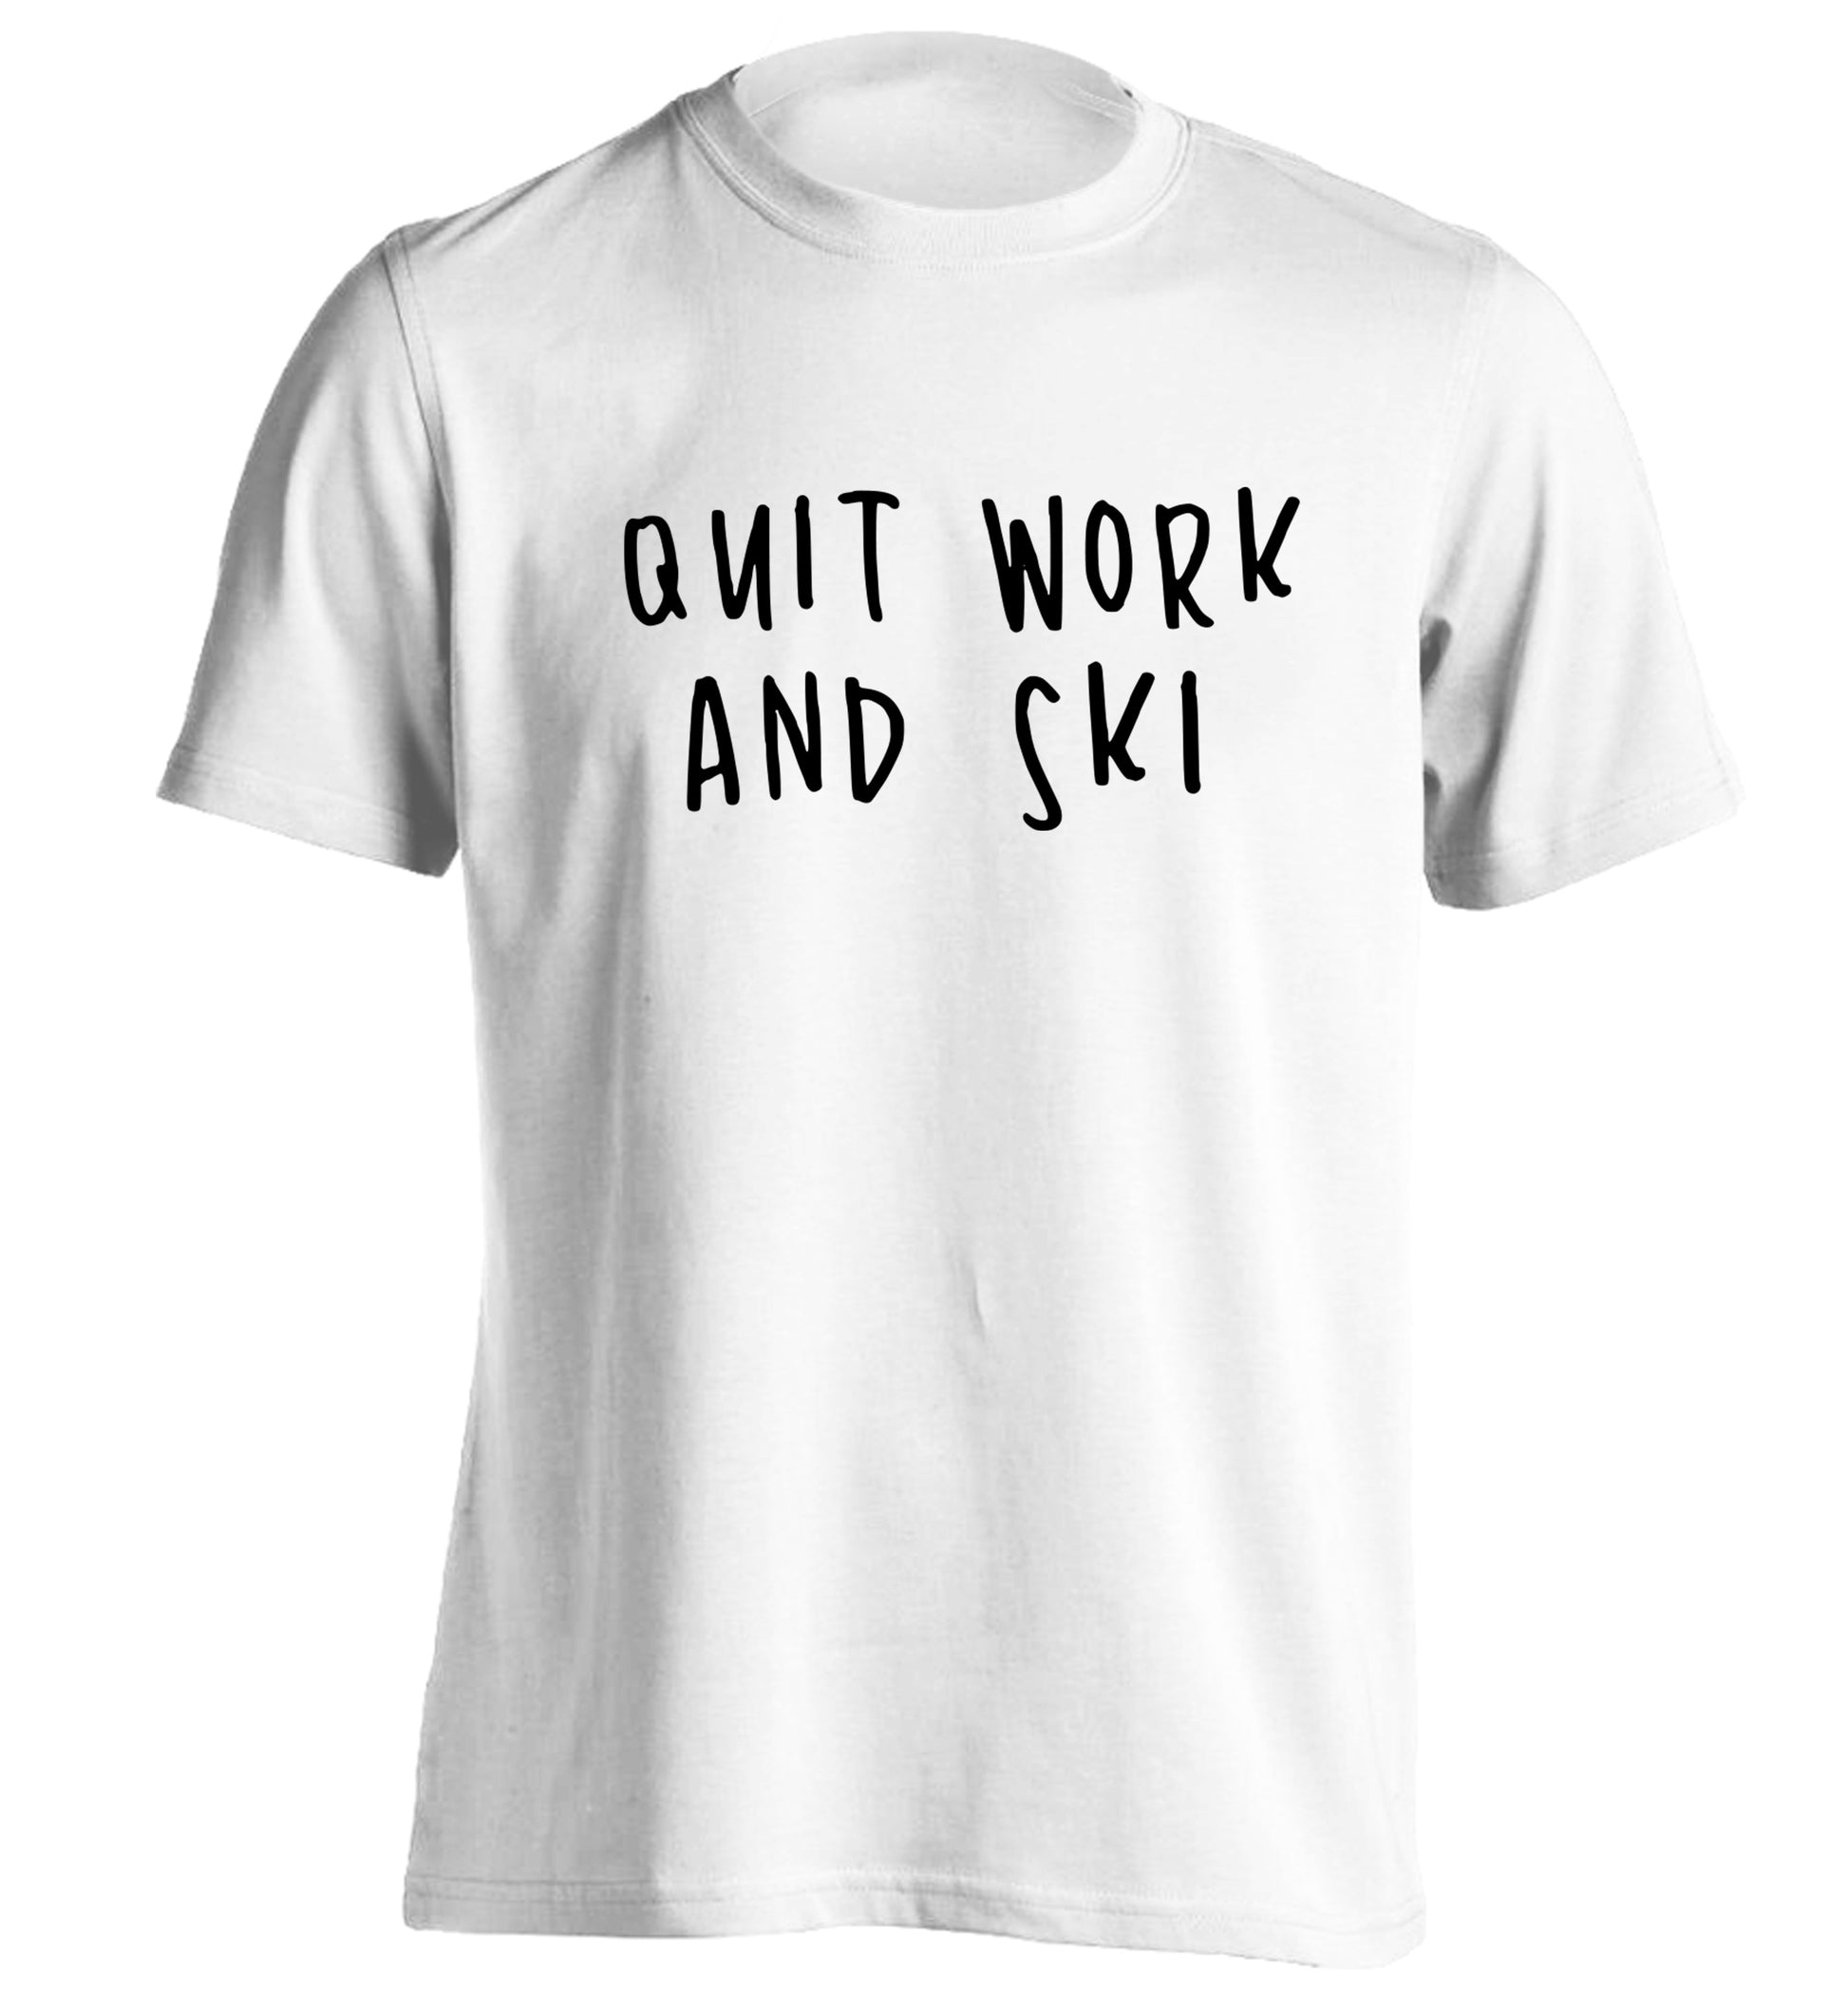 Quit work and ski adults unisexwhite Tshirt 2XL